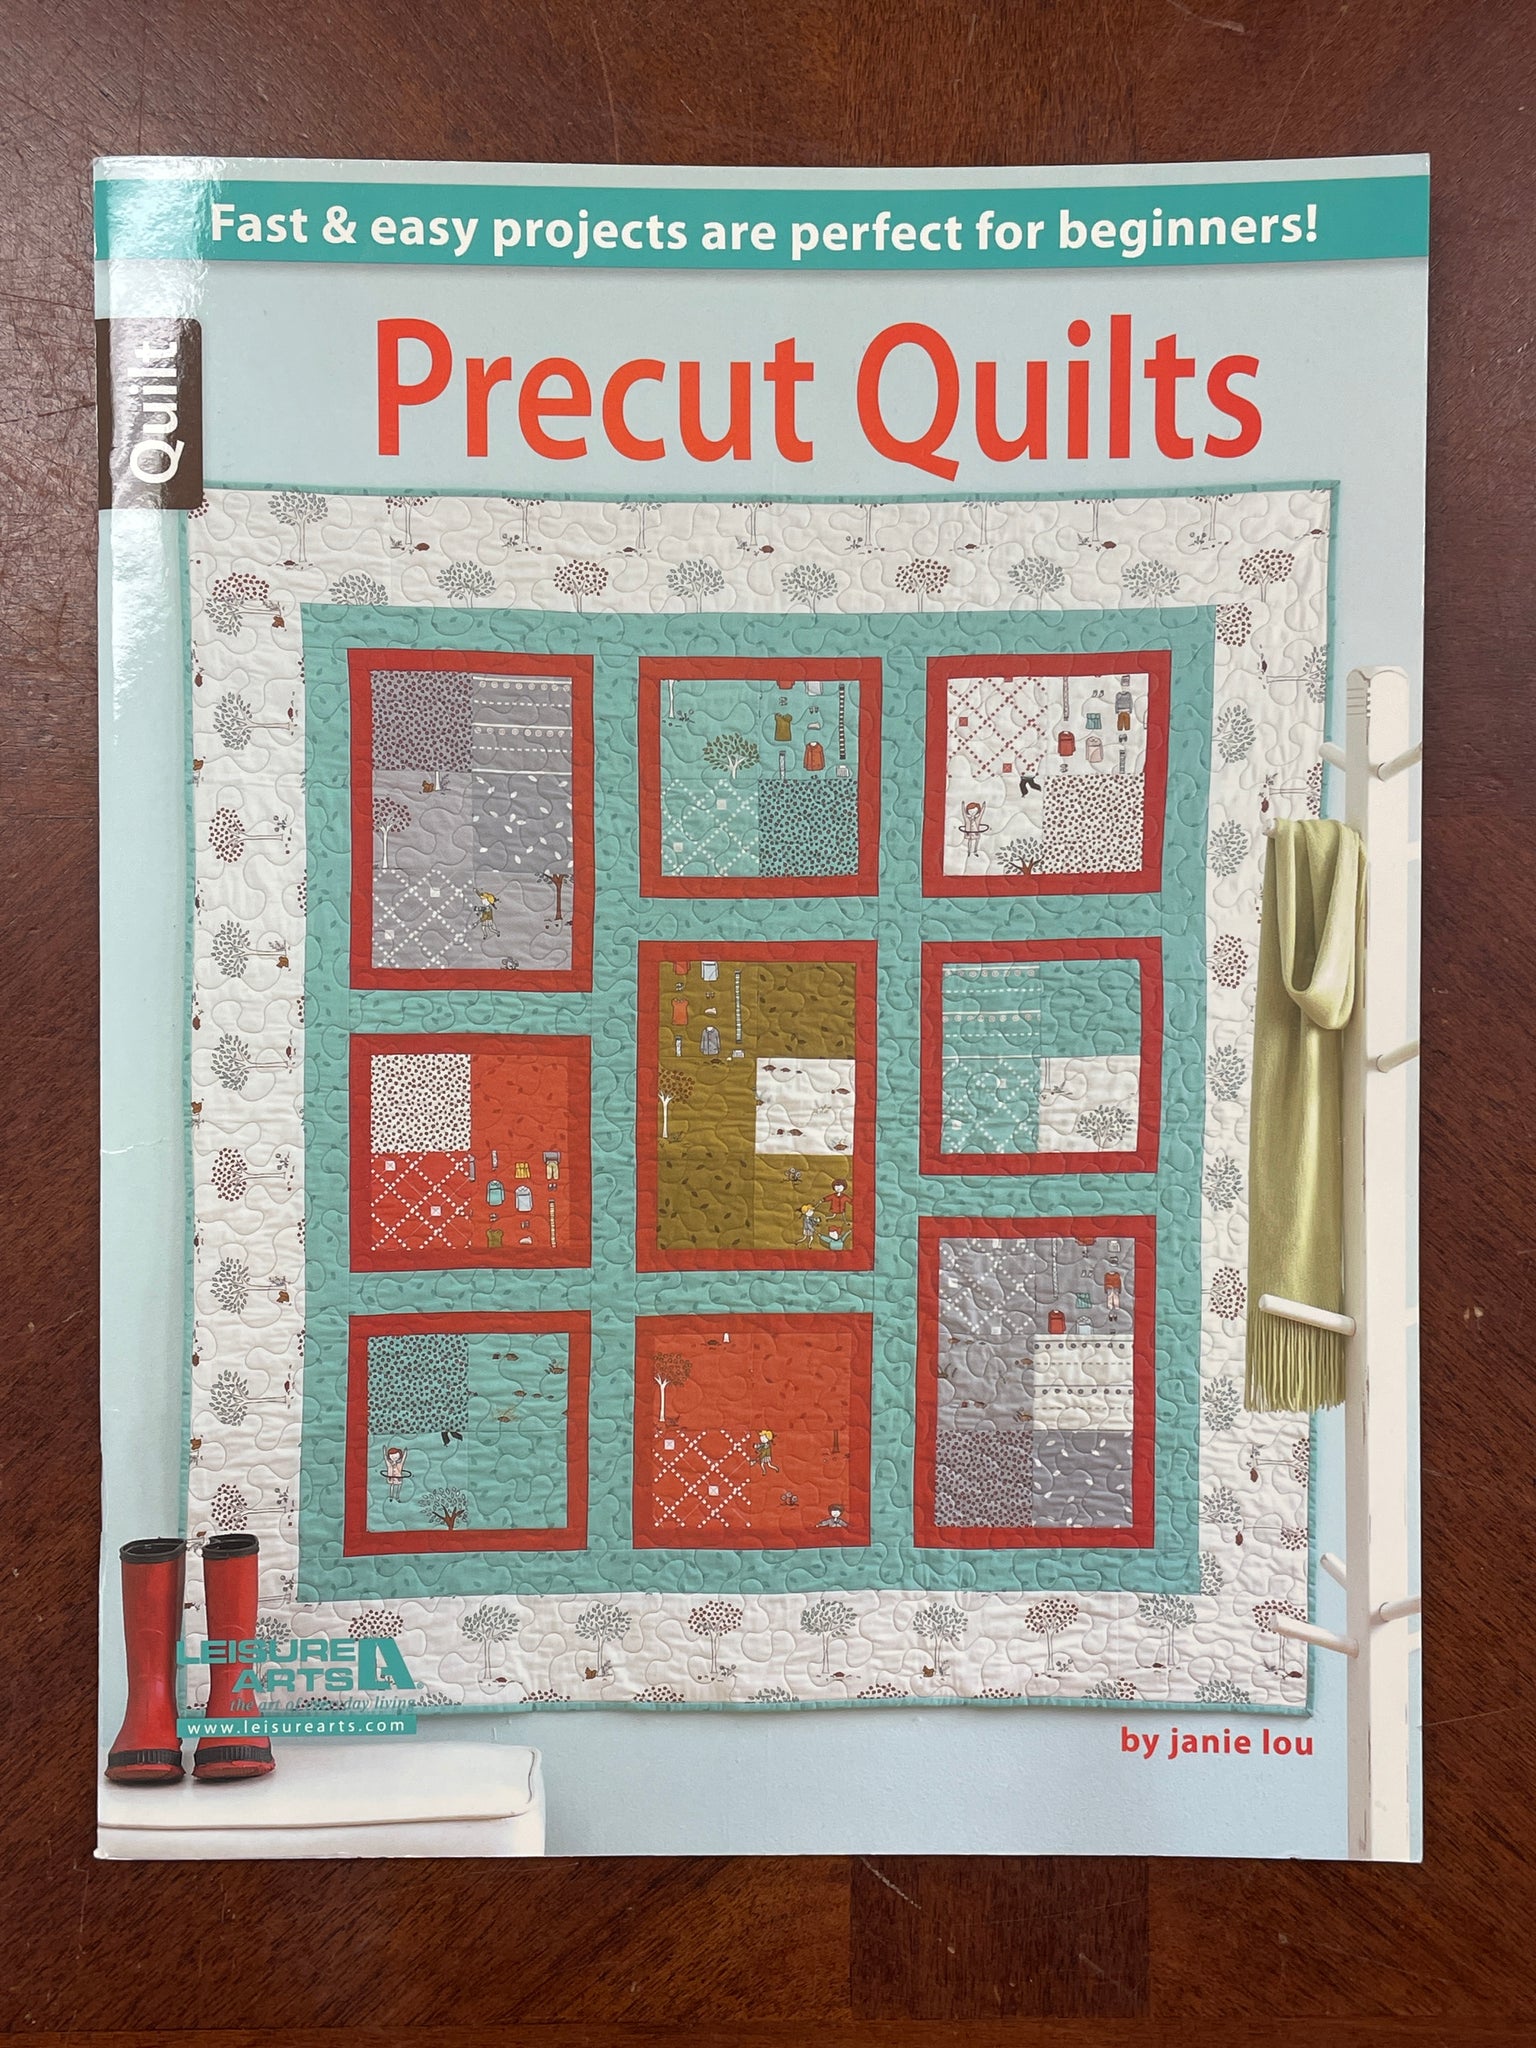 2013 Quilting Book - "Precut Quilts"